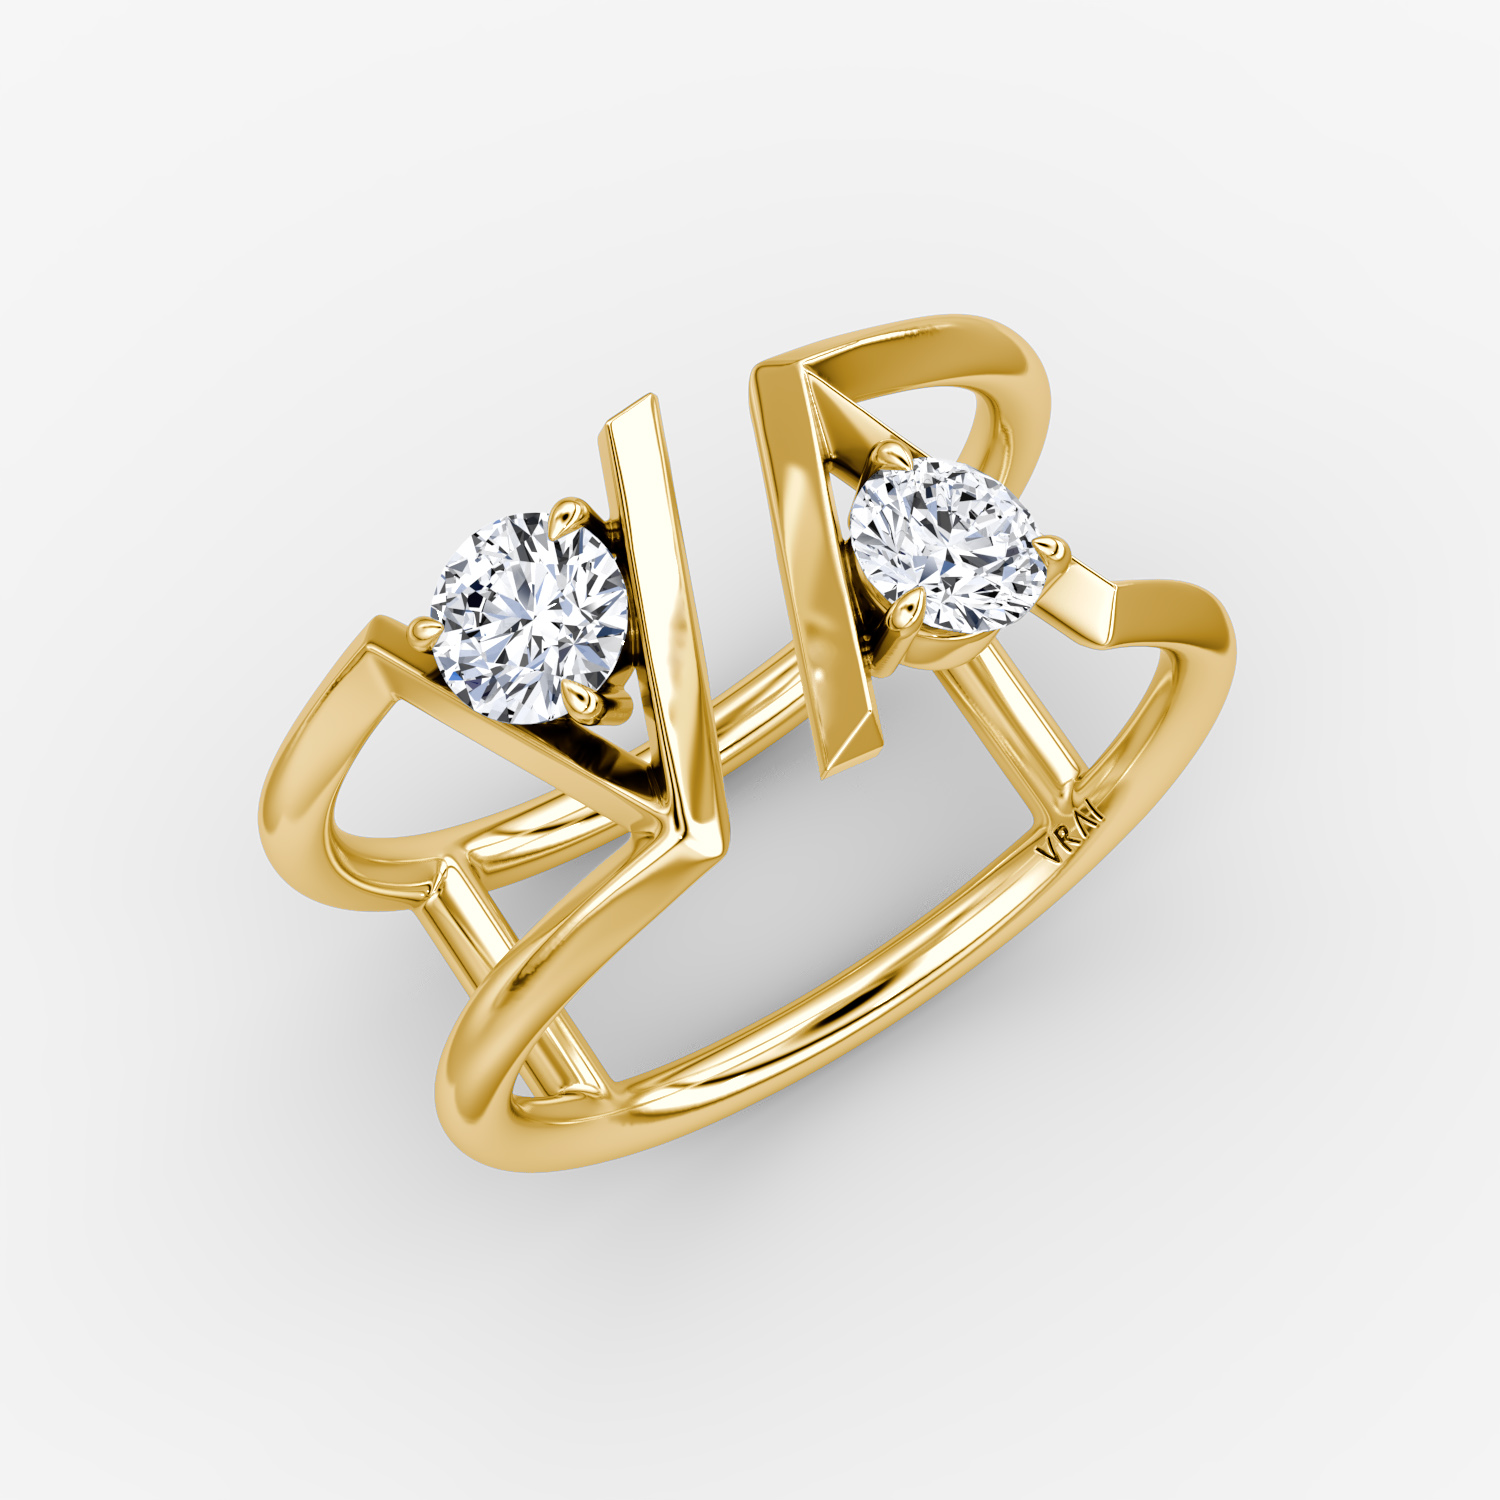 Ladies 2.5 Gm Gold Ring at Rs 12000 | Govind nagar | Kanpur | ID:  23084508462